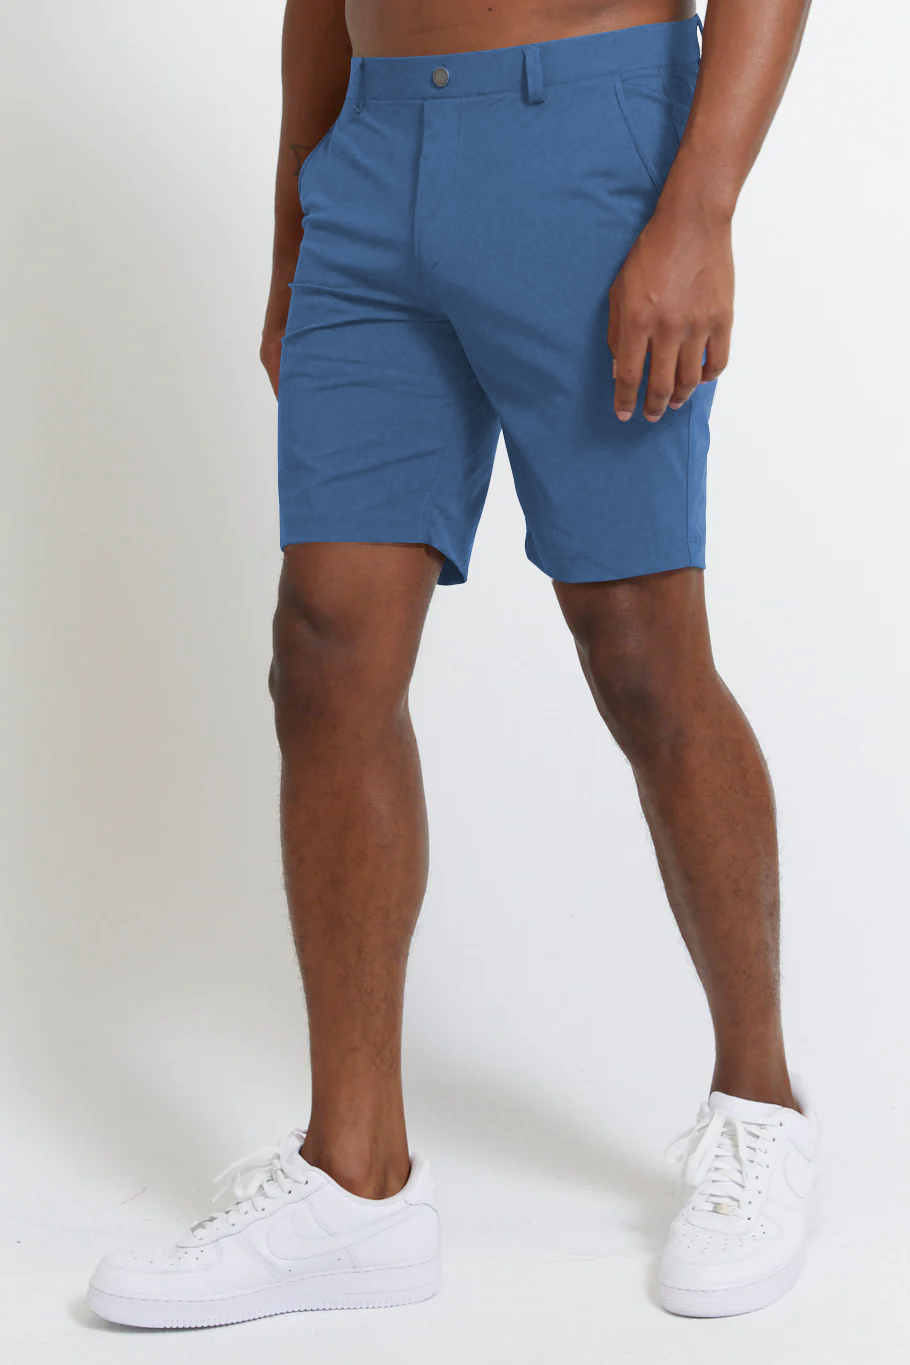 Malbon Golf Hanover Pull-On Shorts - INDIGO - Sun Diego Boardshop